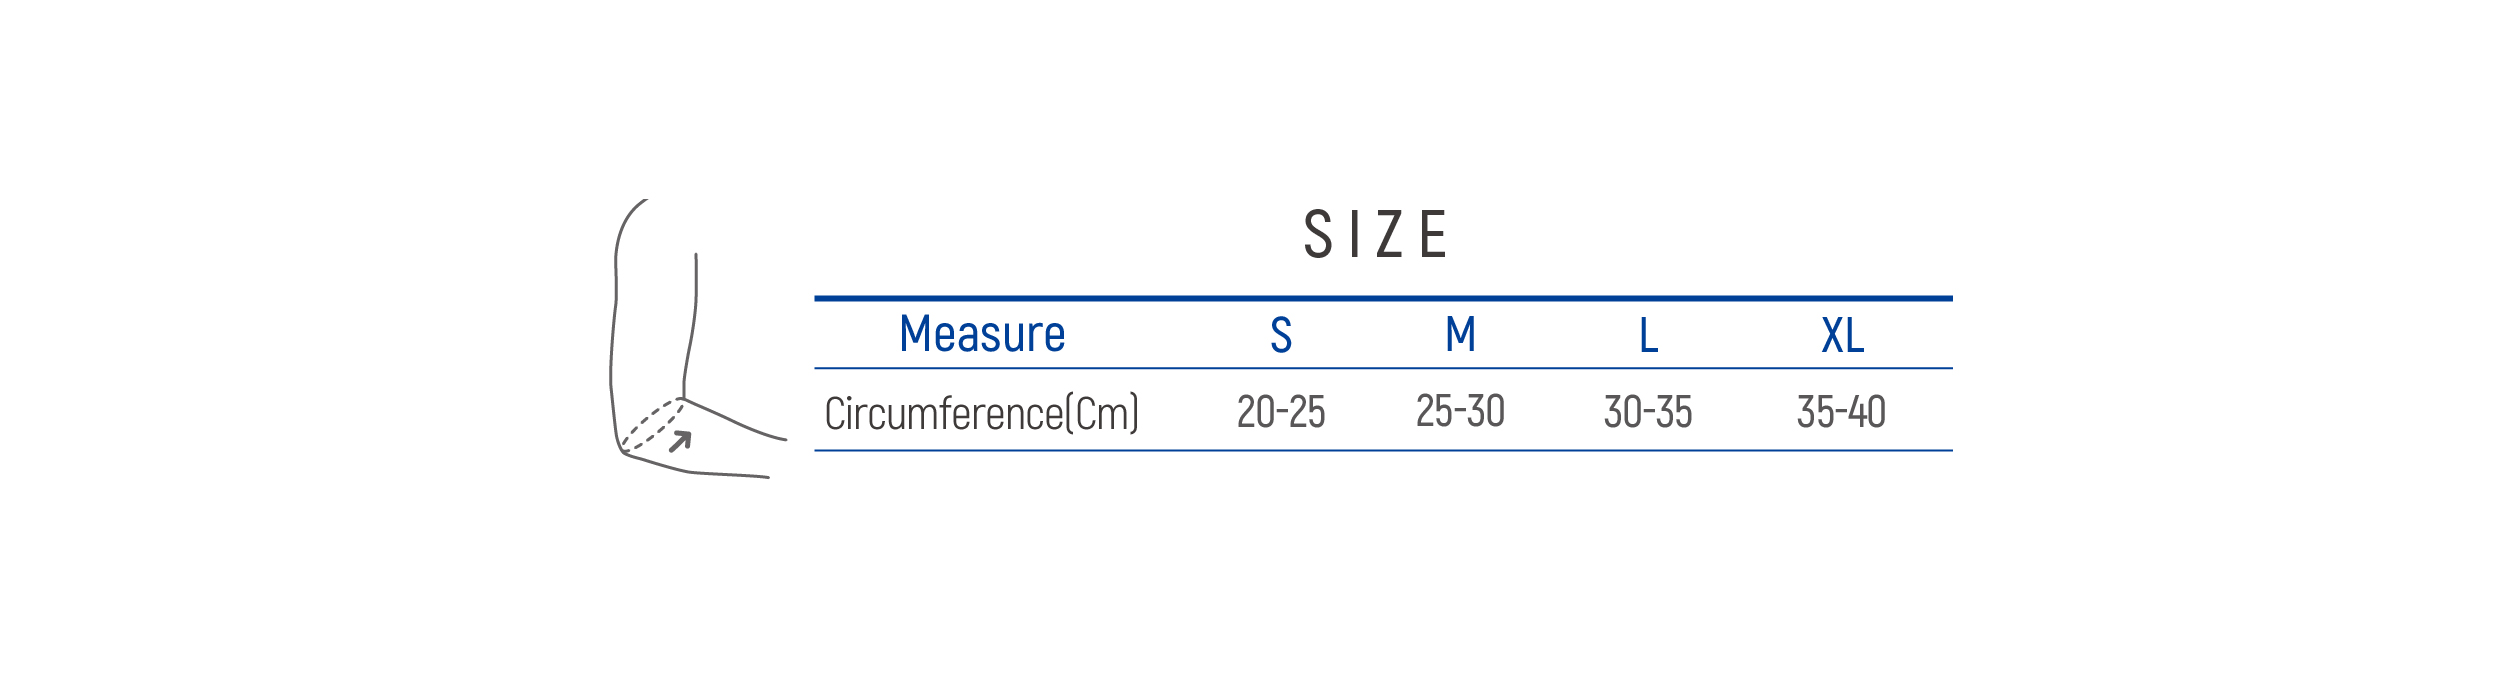 DR-E005 Size table image